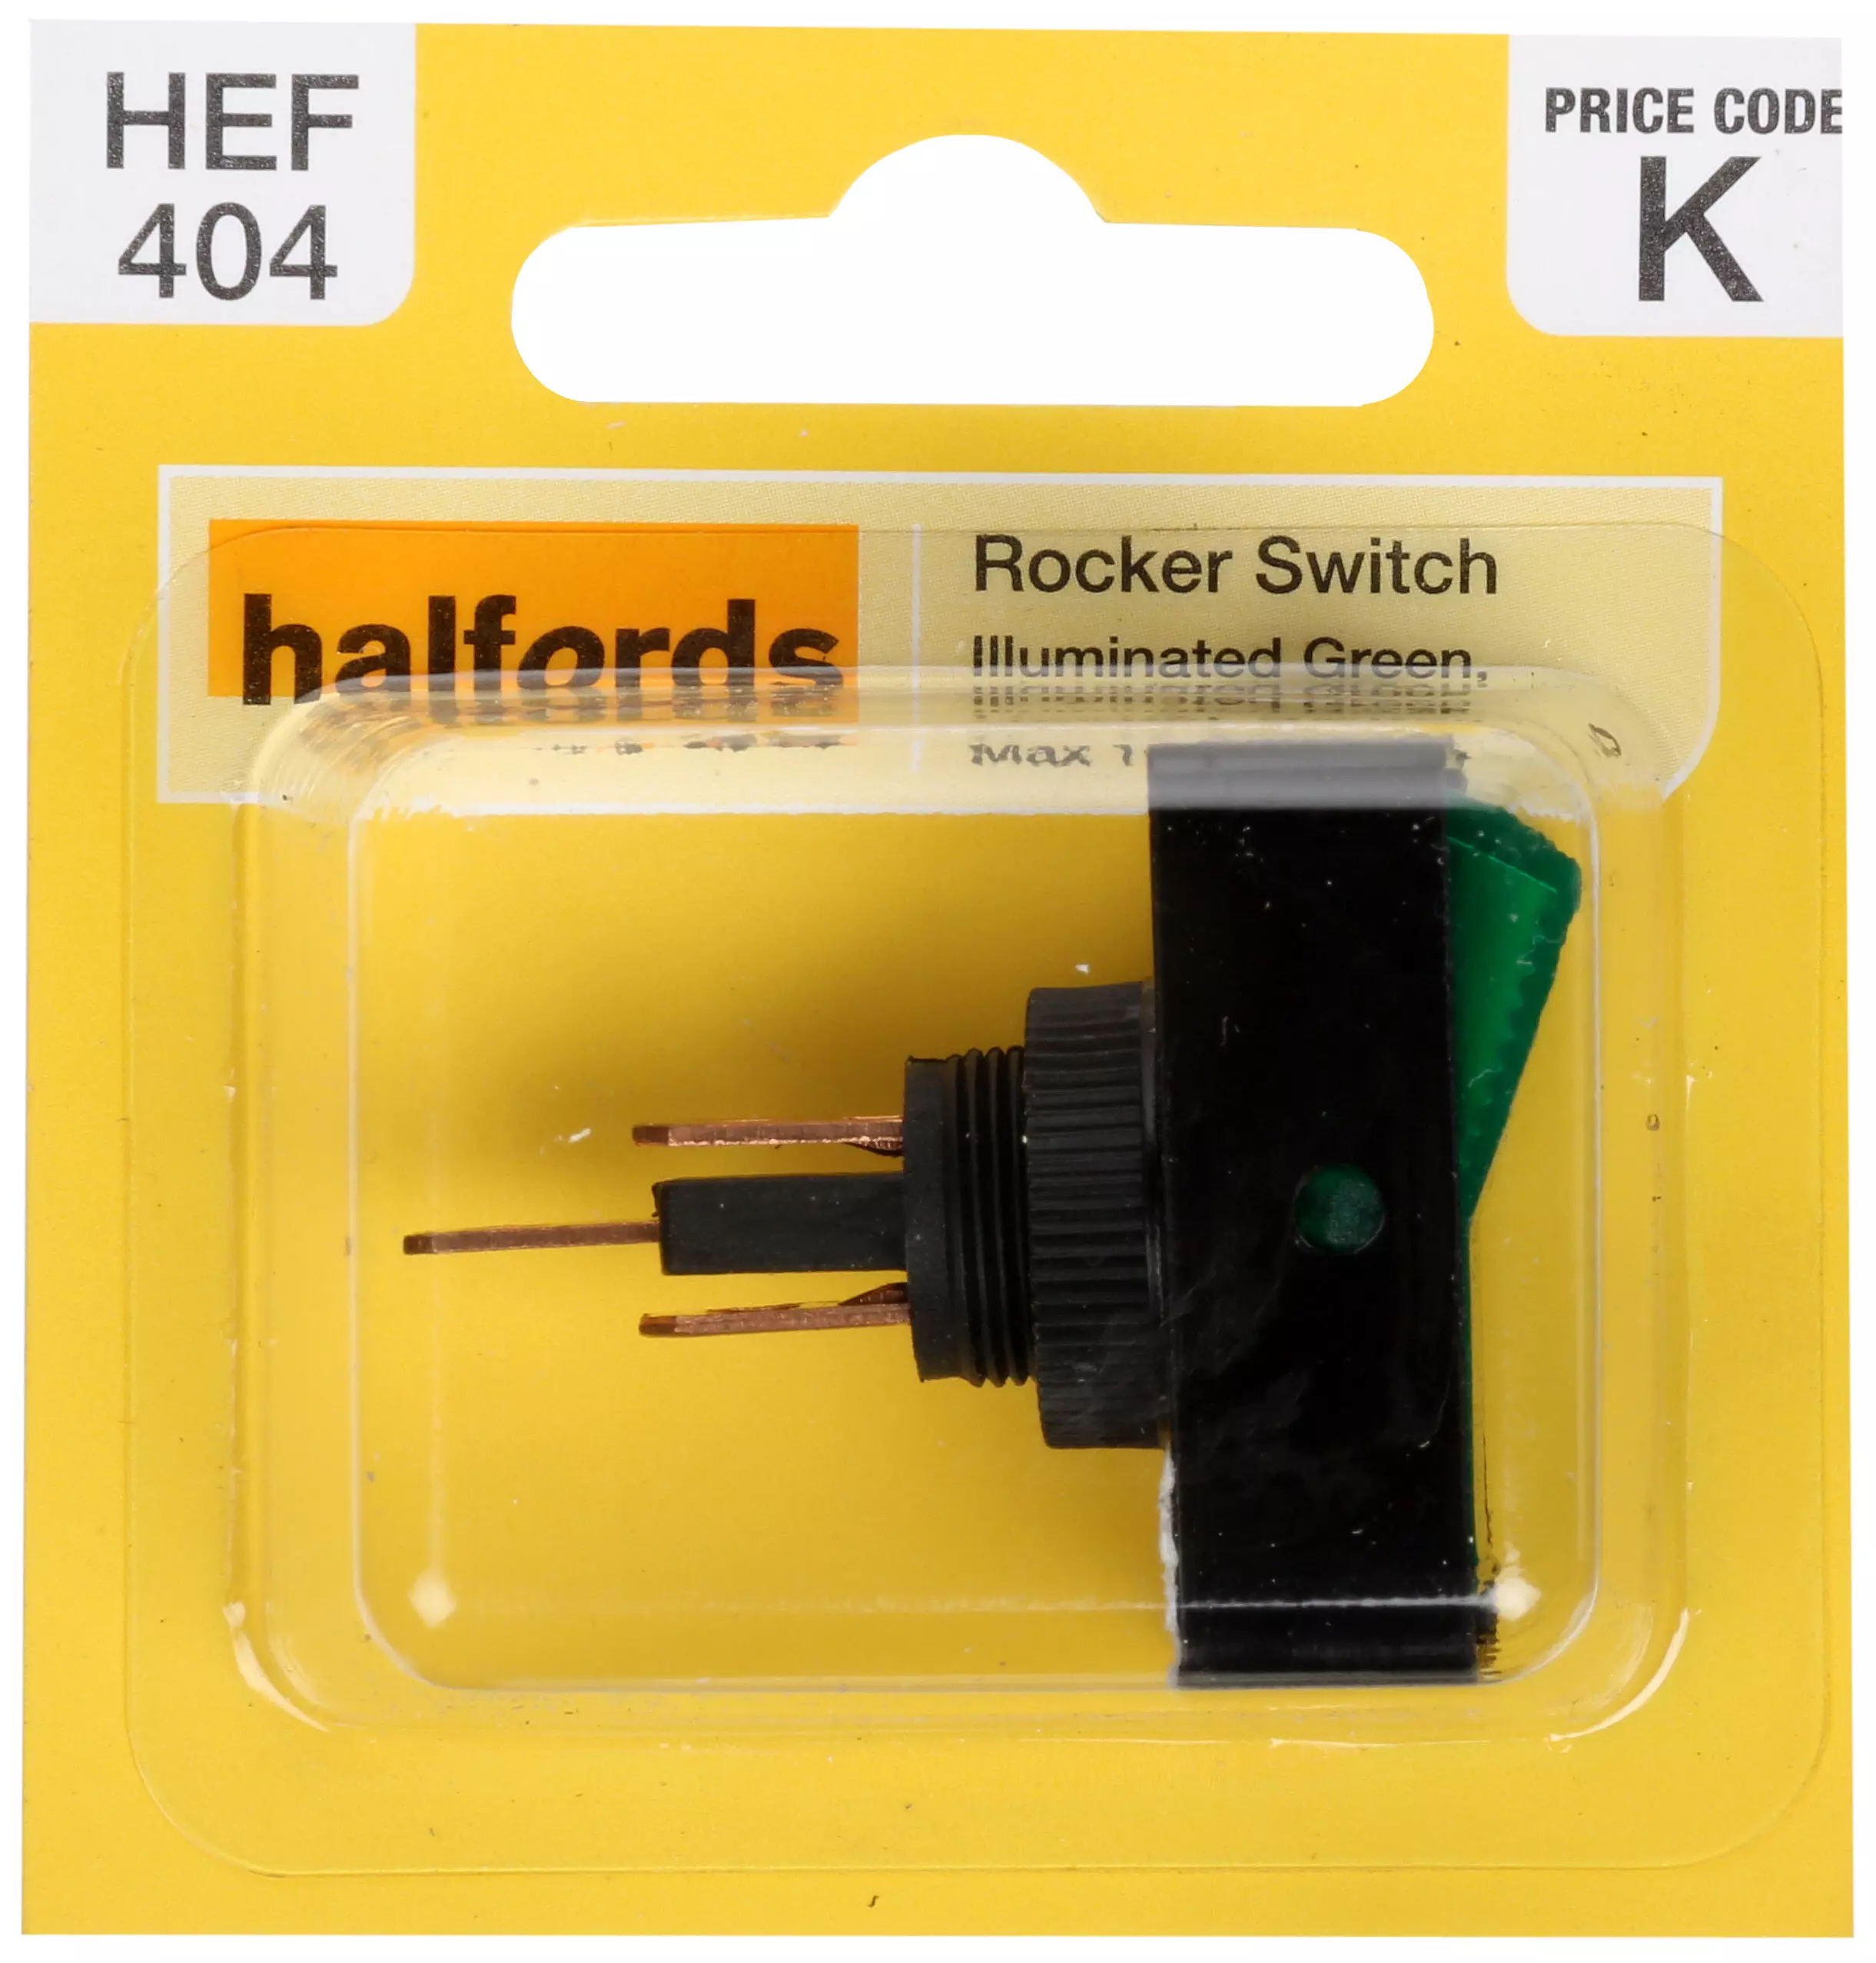 ■ ­Halfords Rocker Switch Illuminated Green 16 Amp